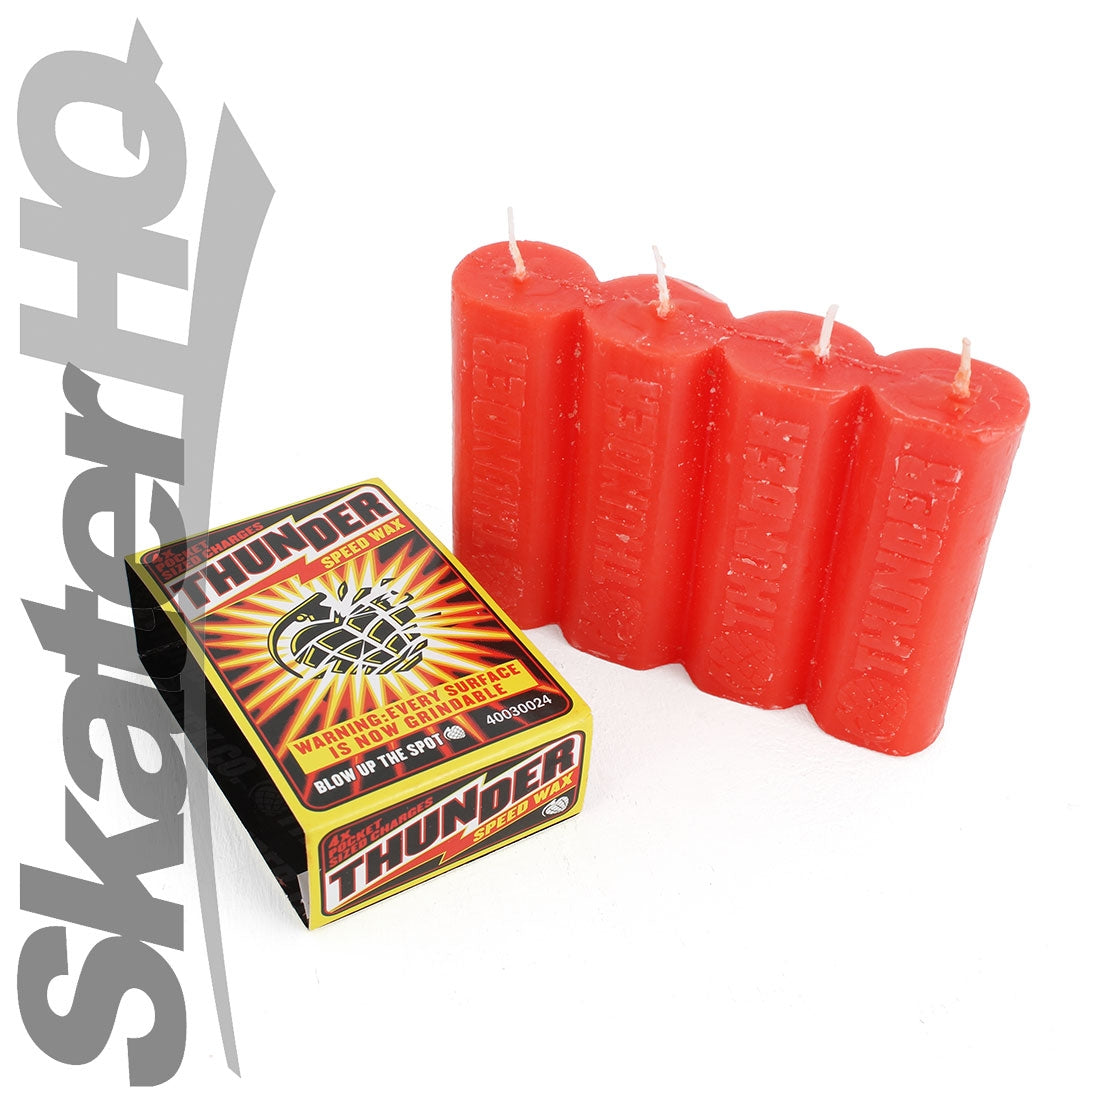 Thunder Curb Dynamite Wax - Red Skateboard Accessories